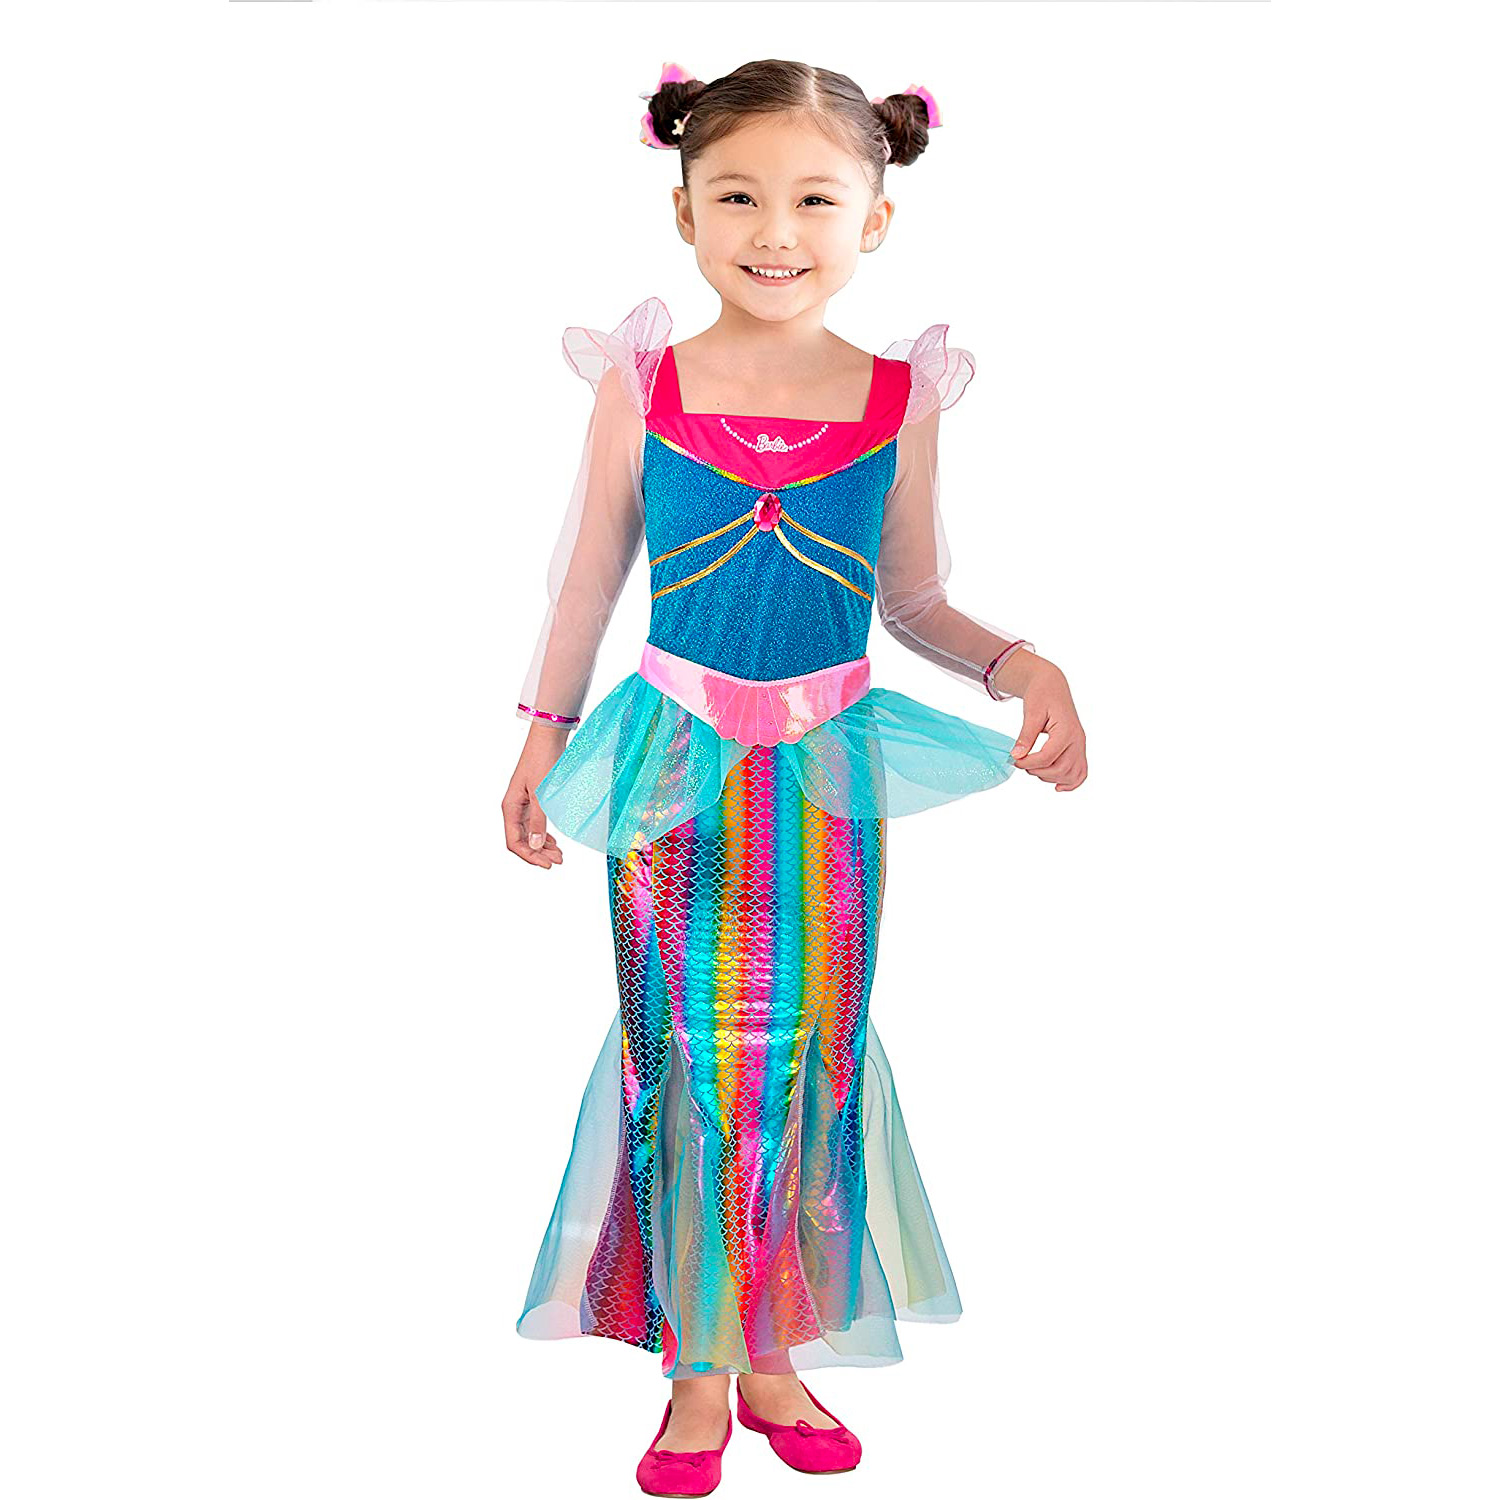 Barbie Sirenetta Mermaid Arcobaleno Costume Carnevale Travestimento Bambina